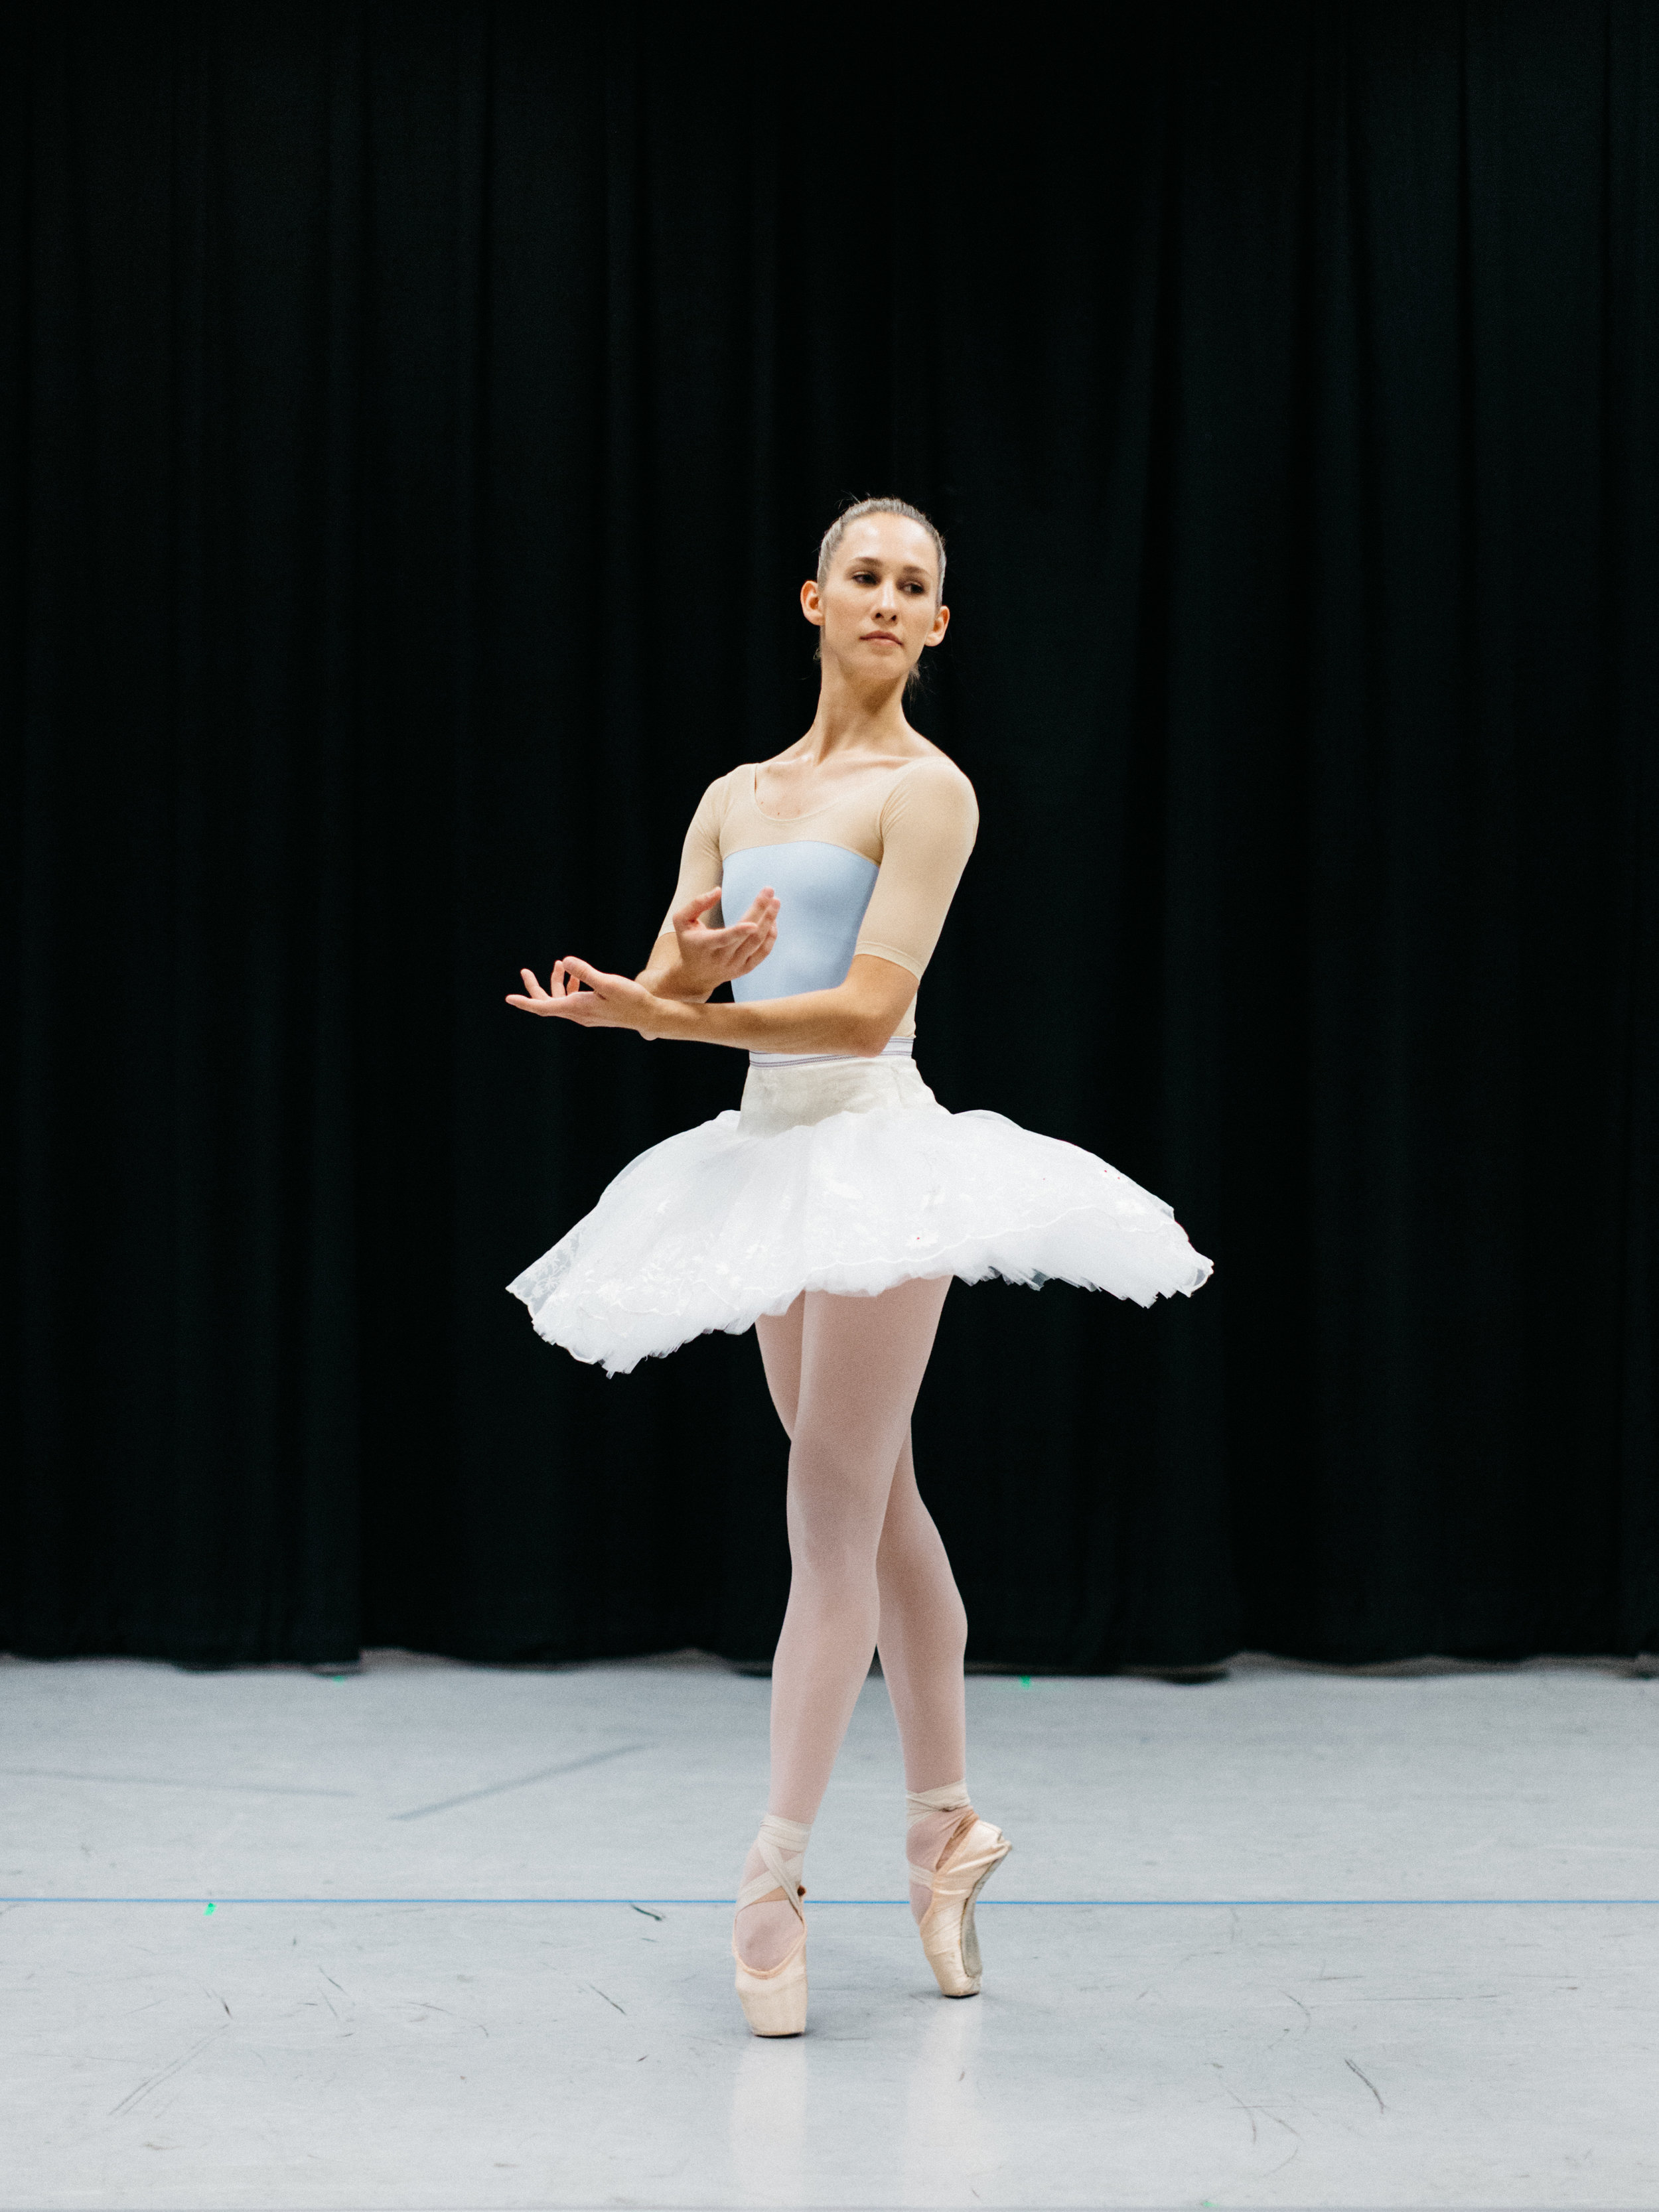 Jessica_Ballet-16.JPG